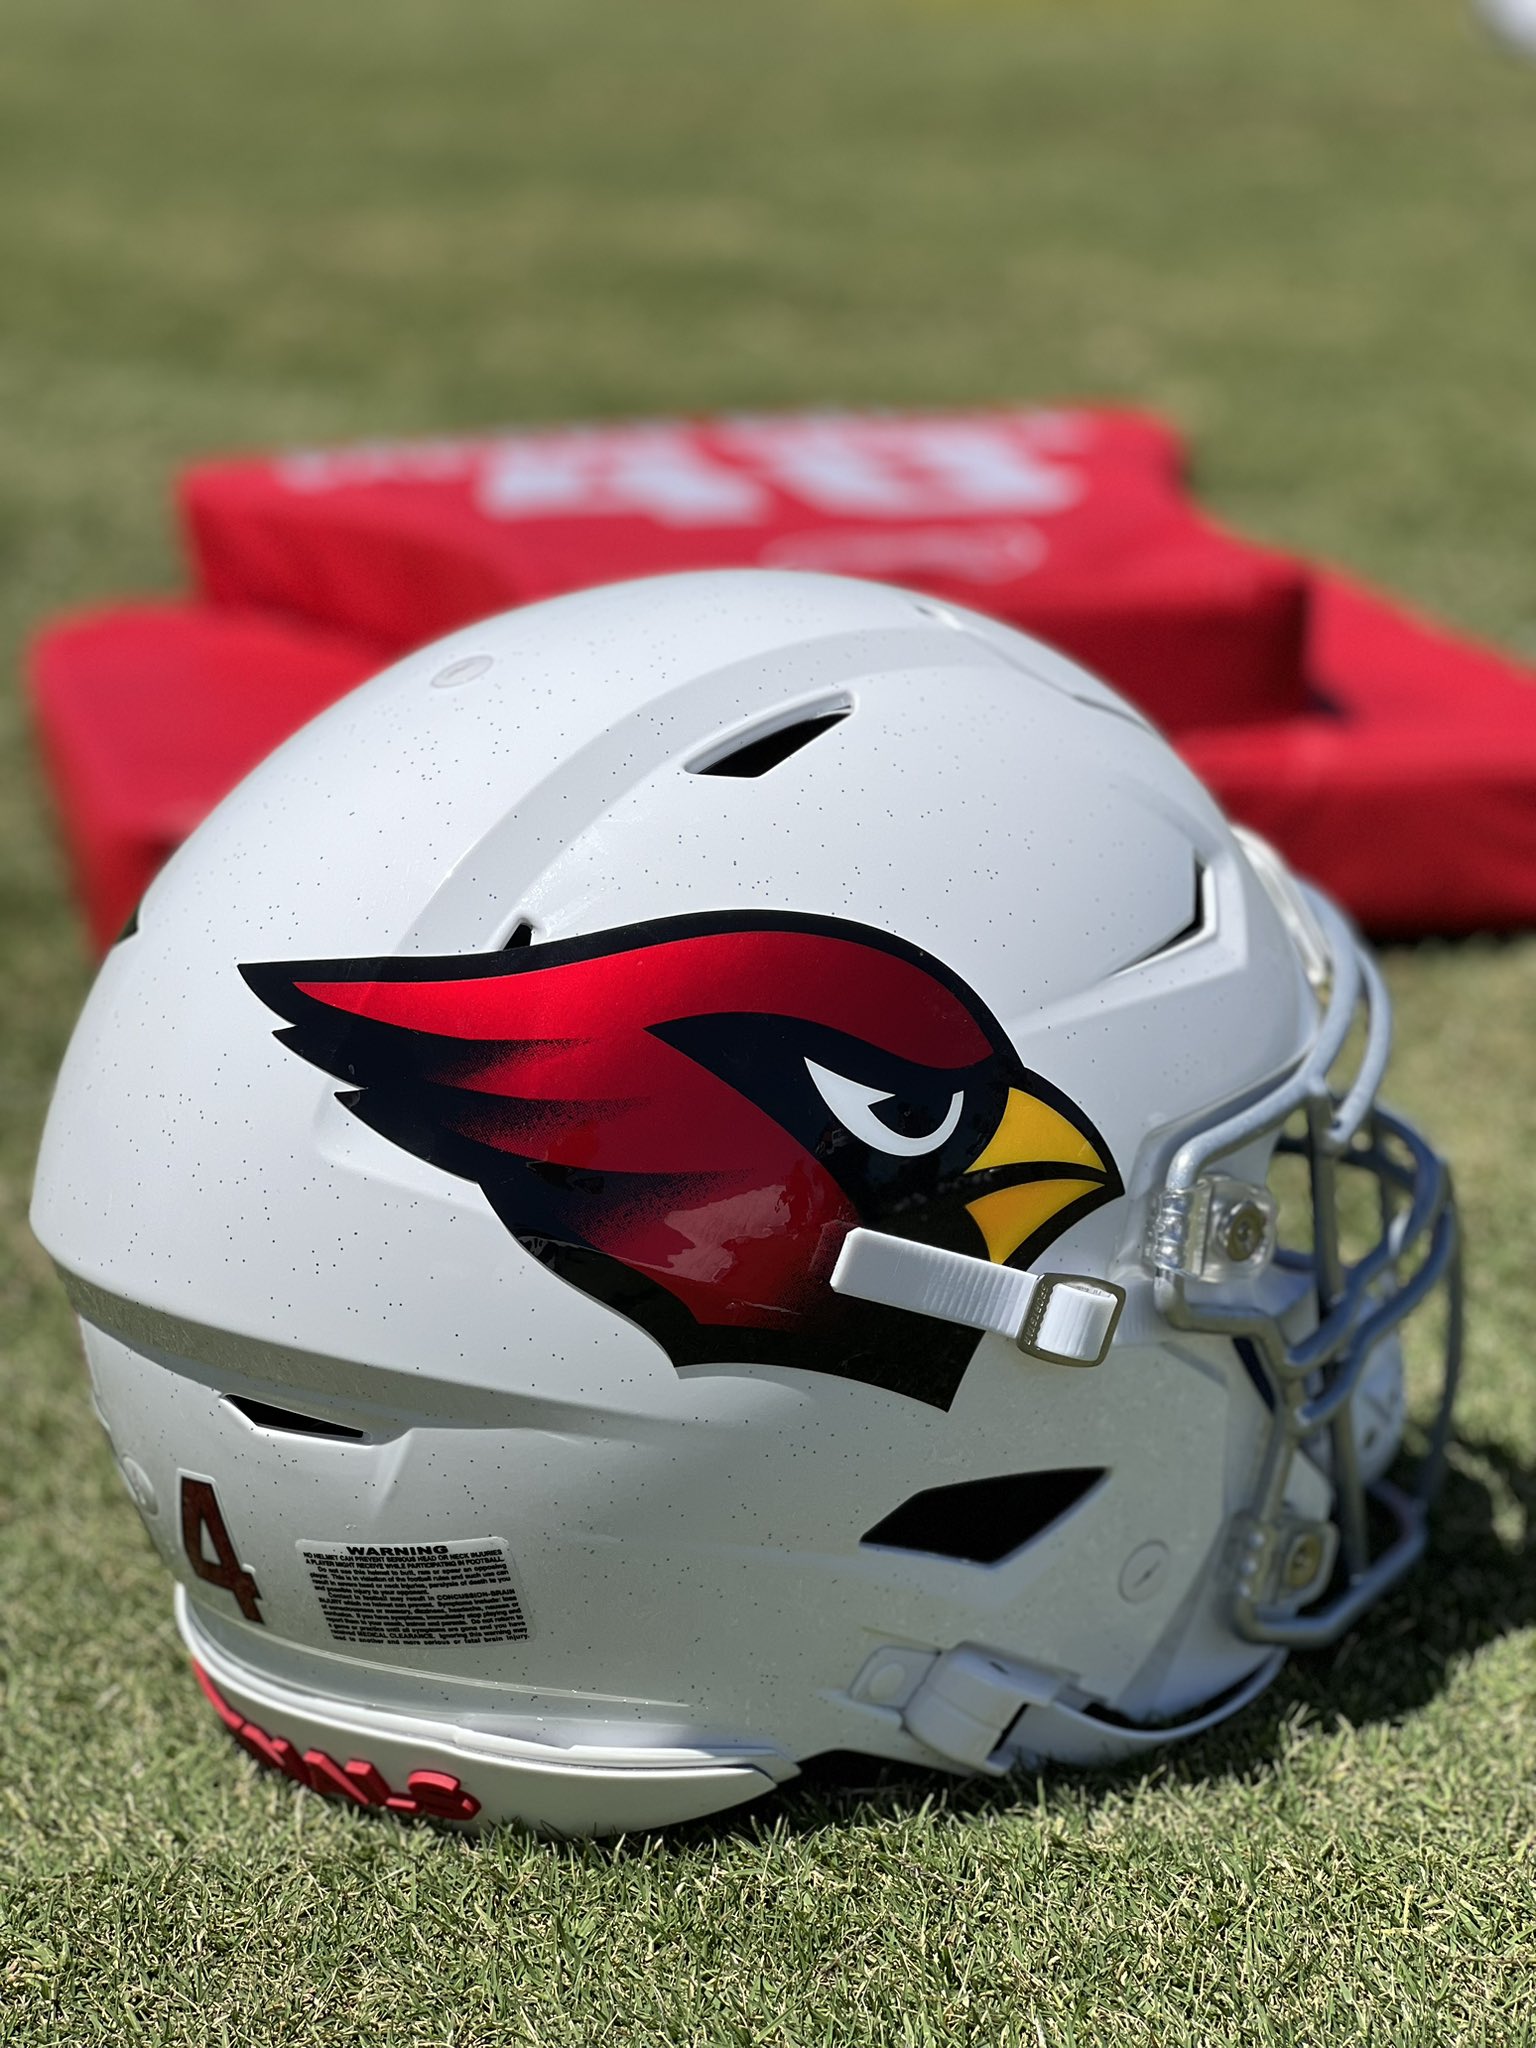 Arizona Cardinals on X: it's just a helmet